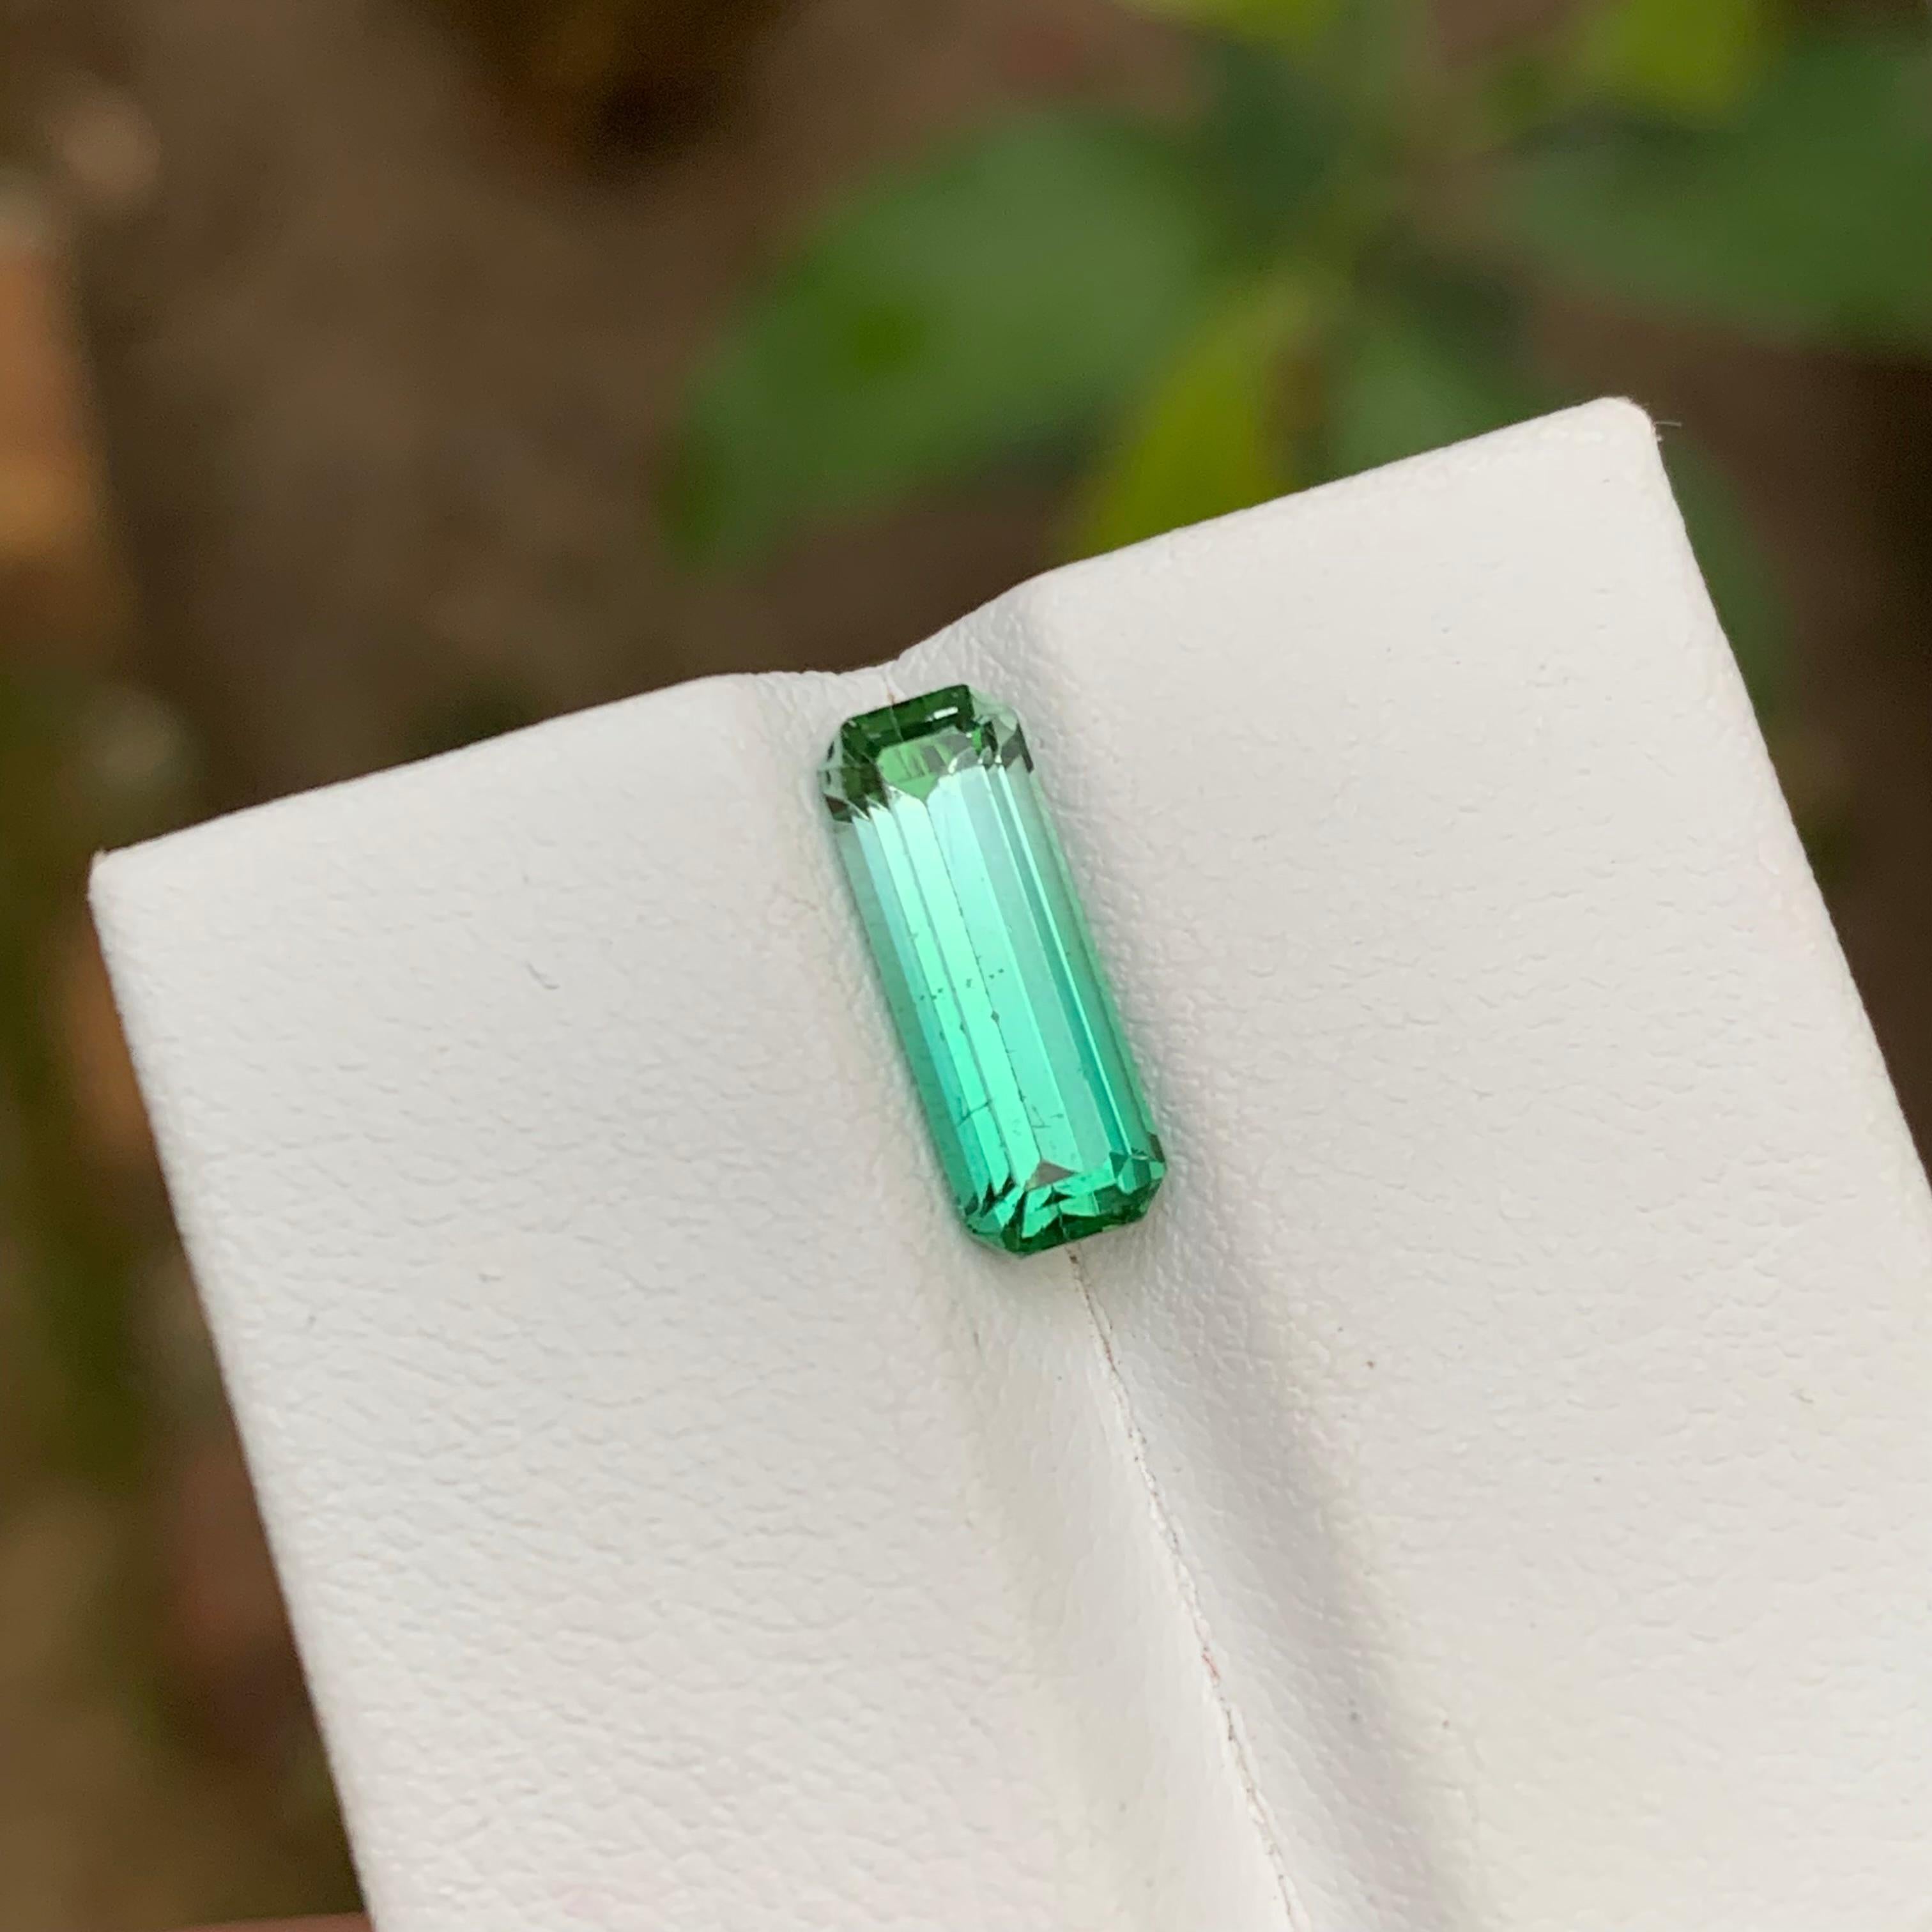 Rare Vivid Bluish Green Bicolor Tourmaline Gemstone 2.25 Ct Emerald Cut for Ring For Sale 3